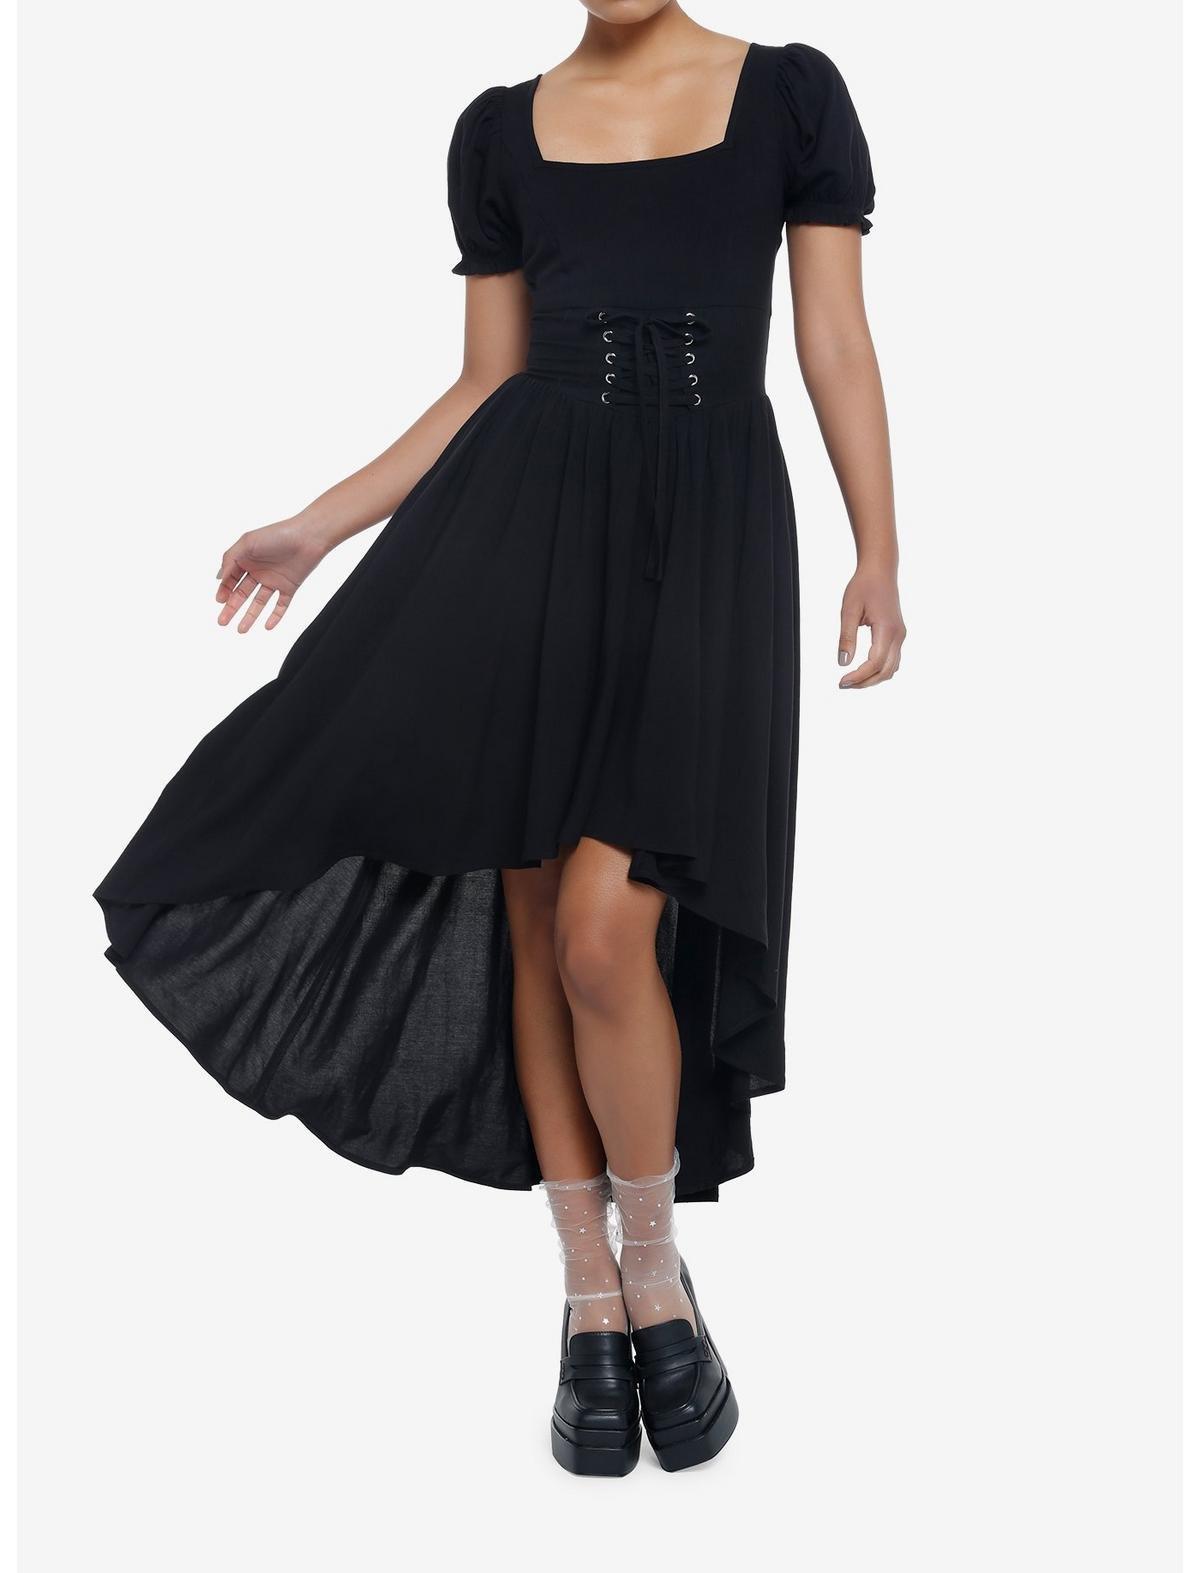 Black Lace-Up Corset Hi-Low Dress, MULTI, hi-res